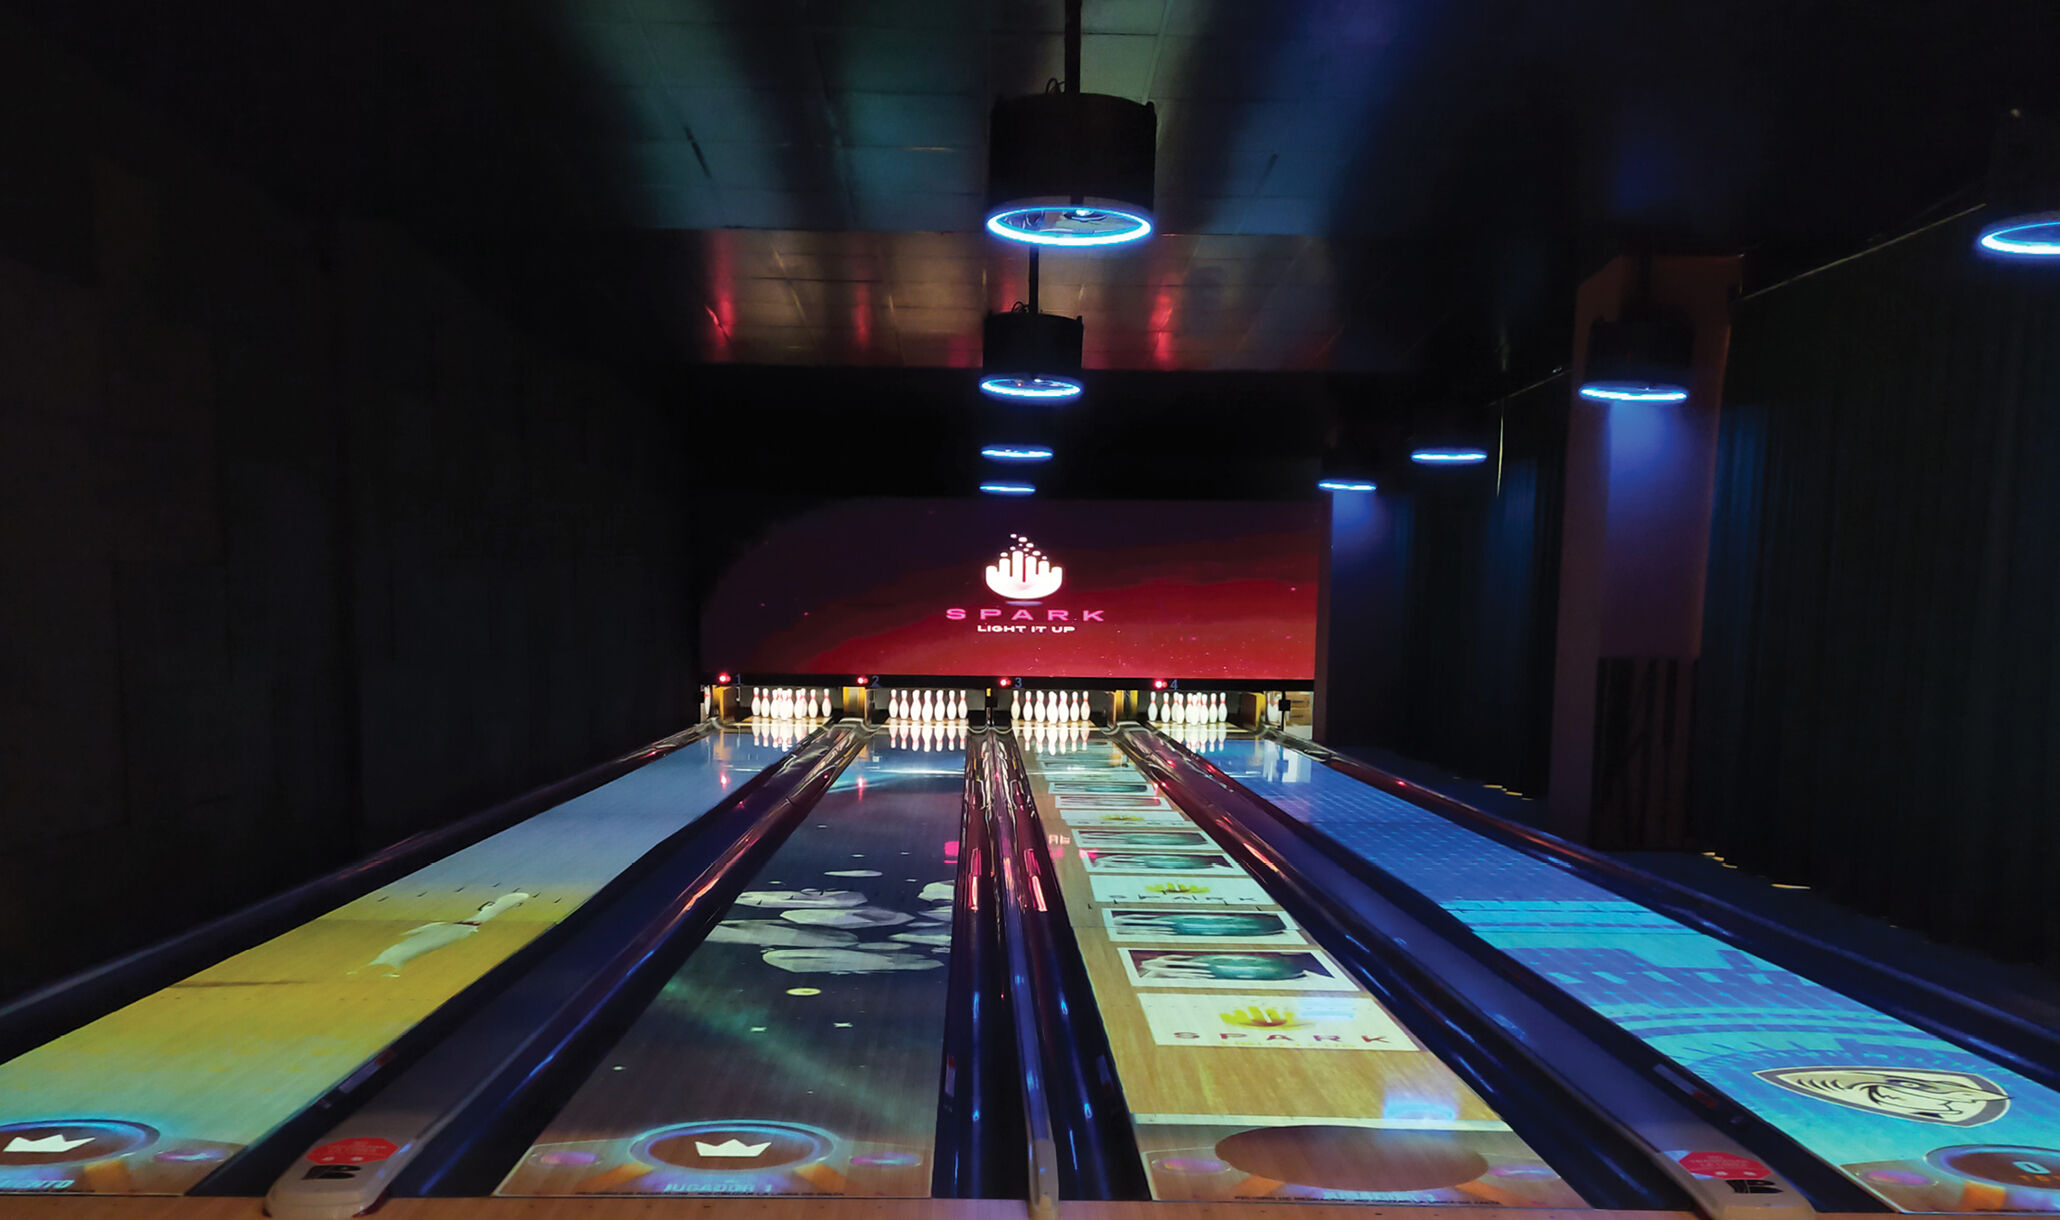 Estrella Park Bowling - Madrid, Spain - Spark-1